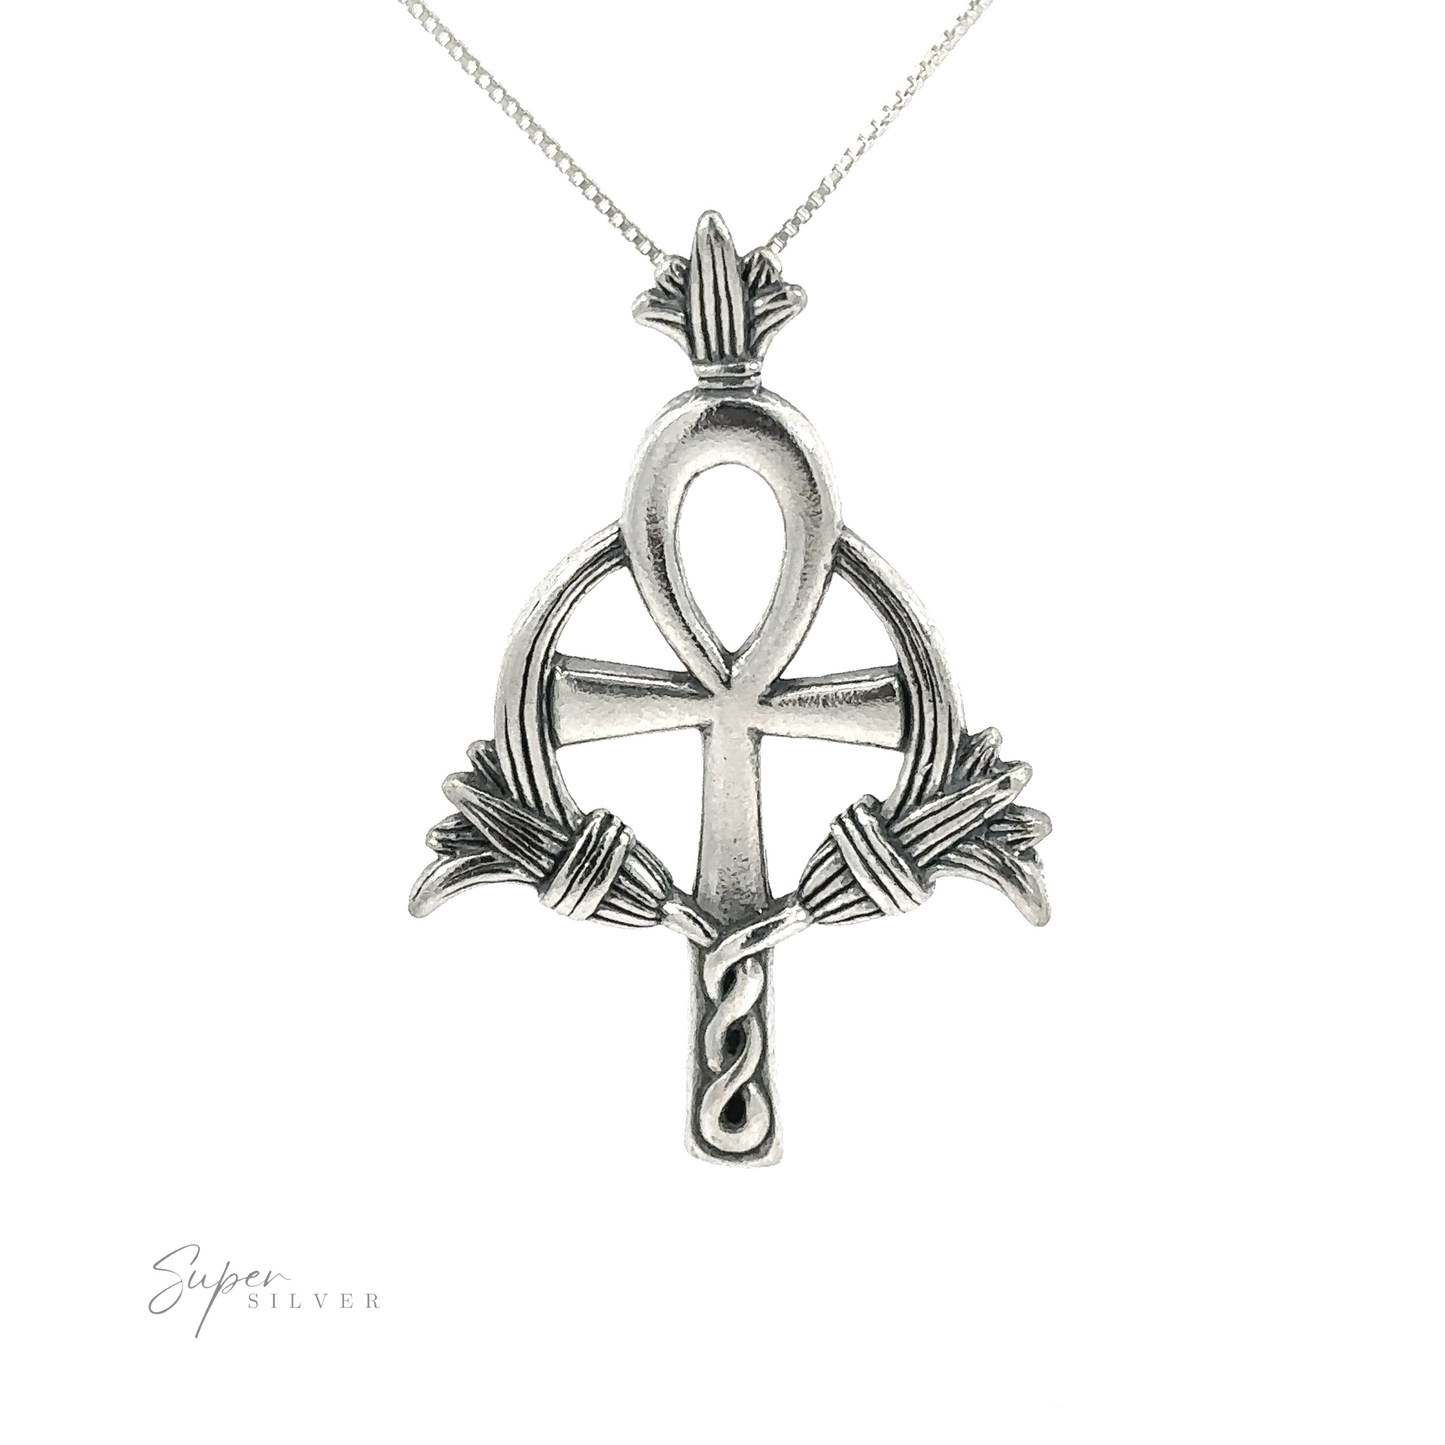 Egyptian embellished ankh pendant symbolizing eternal life in sterling silver.